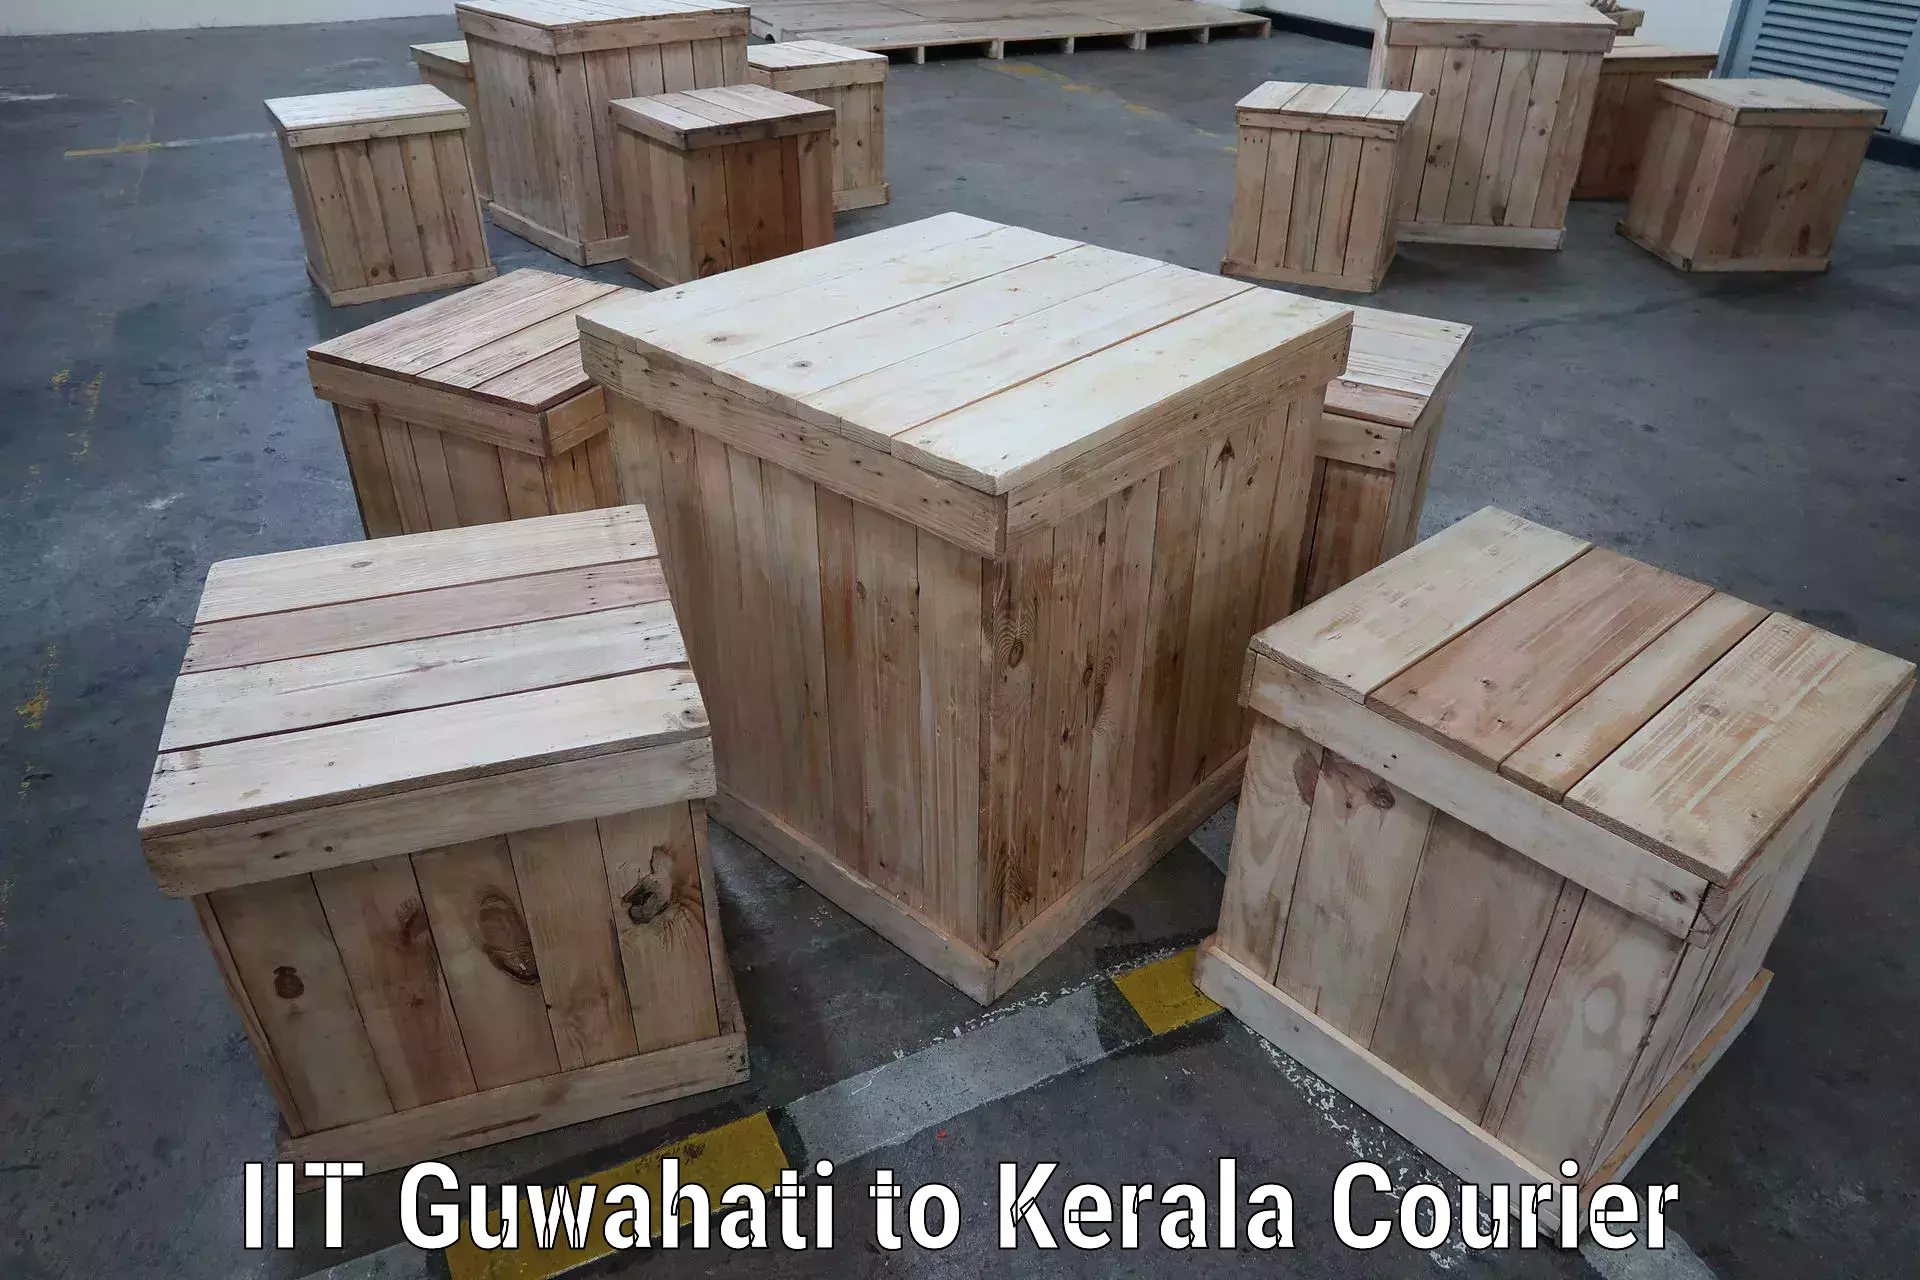 On-call courier service IIT Guwahati to Kerala